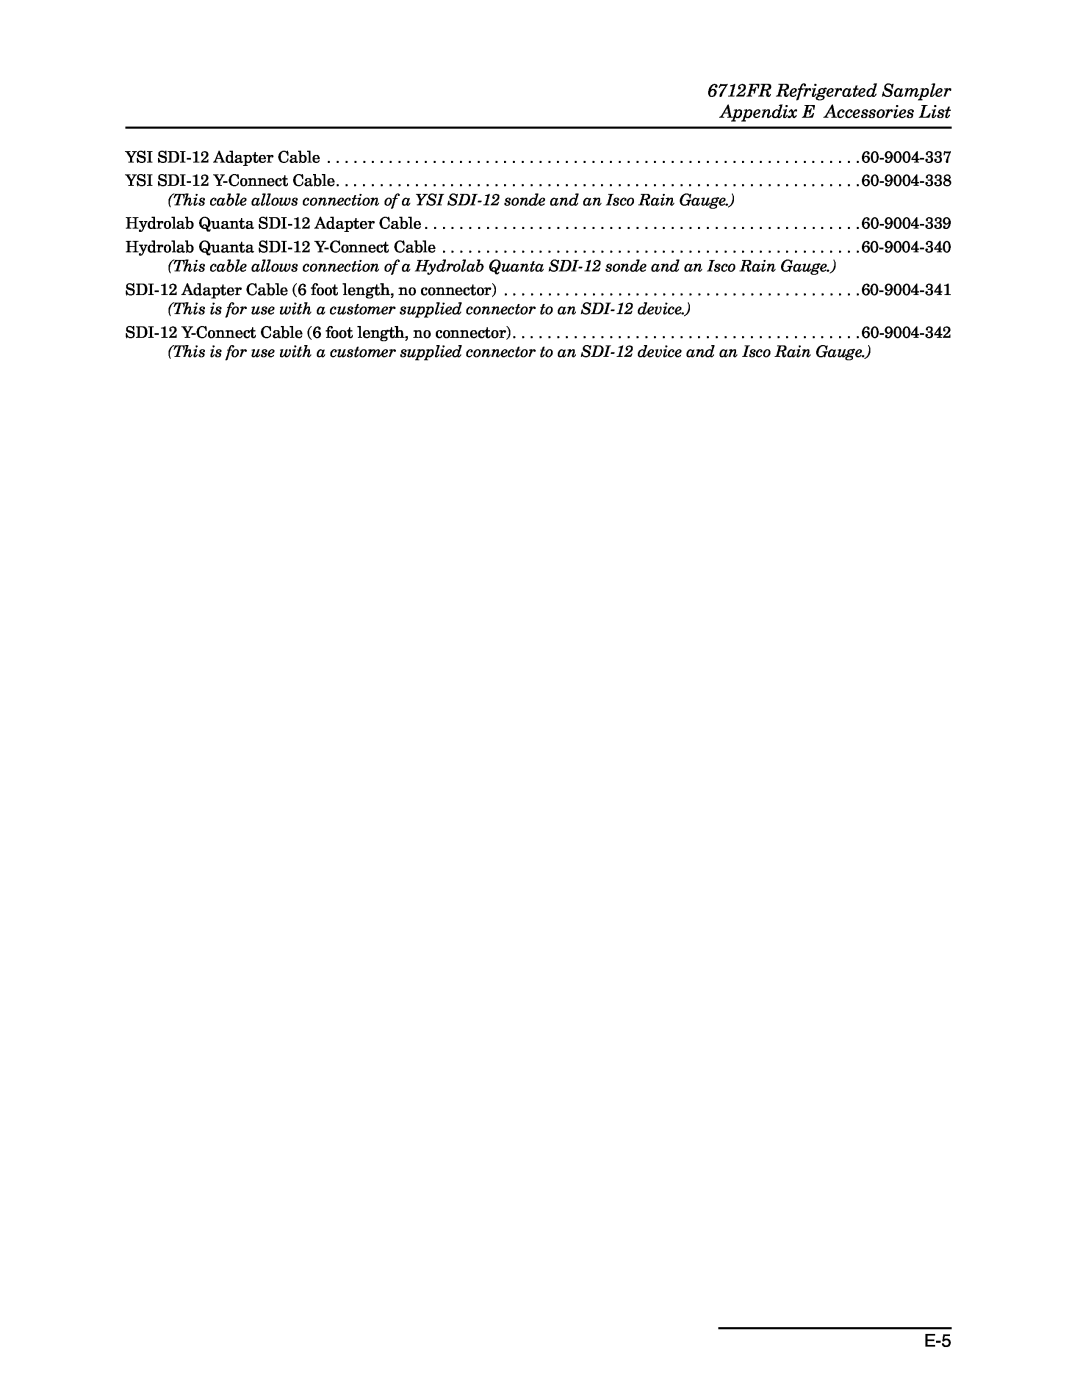 Teledyne manual 6712FR Refrigerated Sampler Appendix E Accessories List 